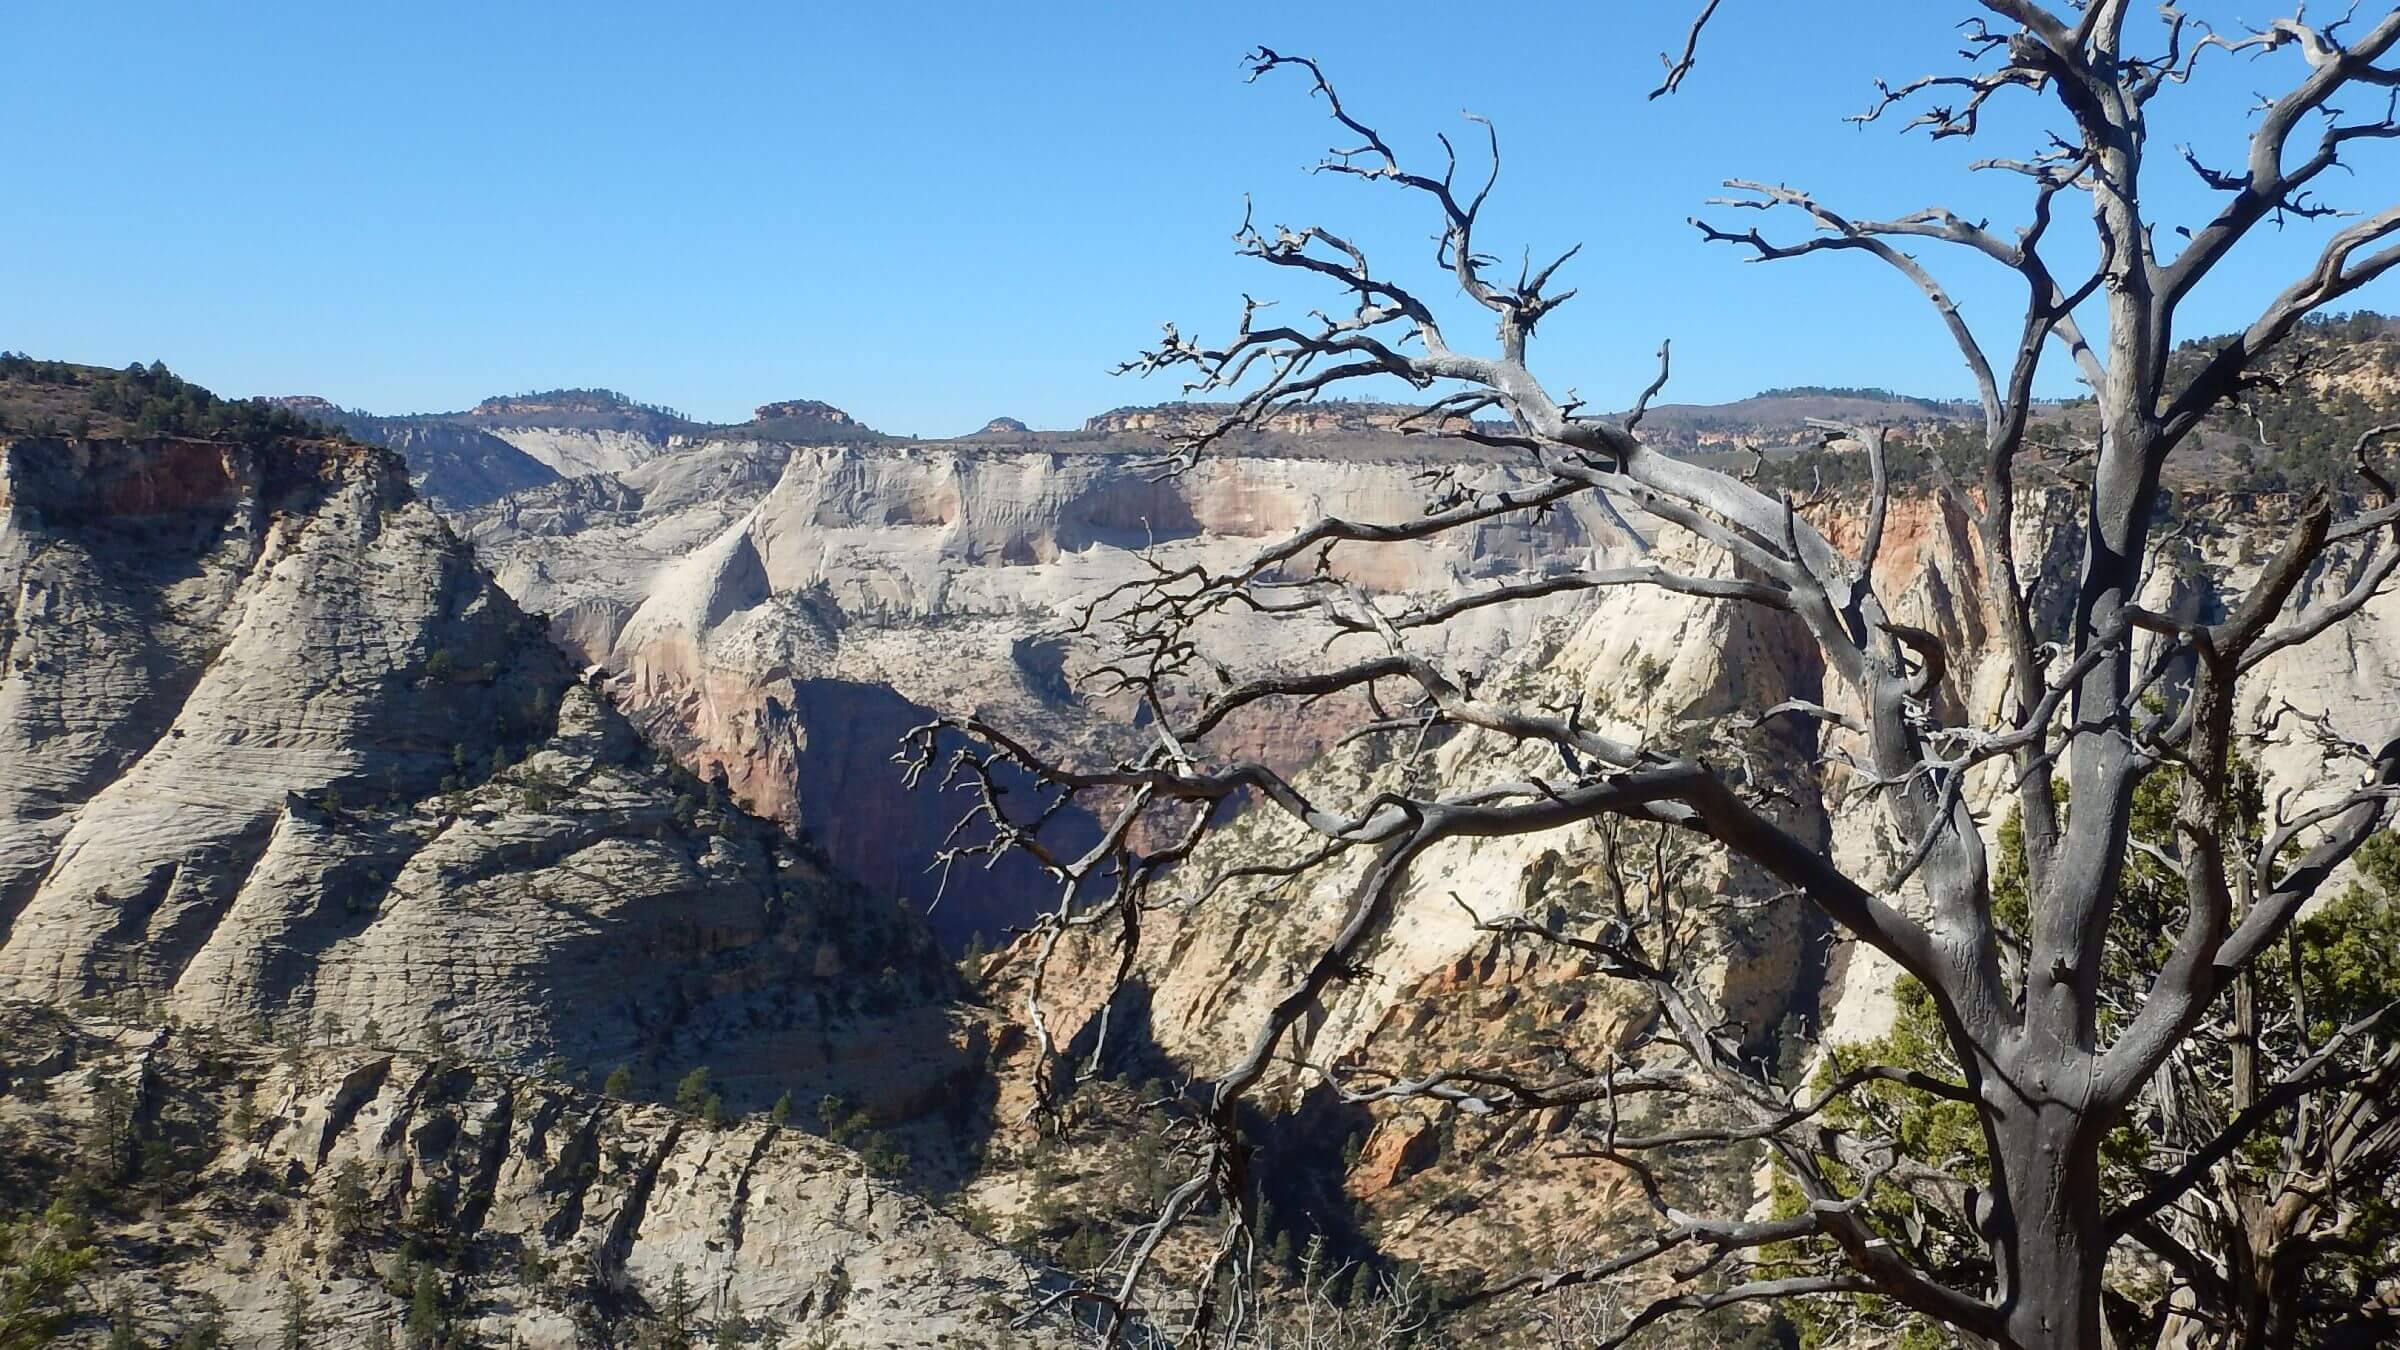 Zion Wilderness, Echo Canyon, East Rim Trail, November